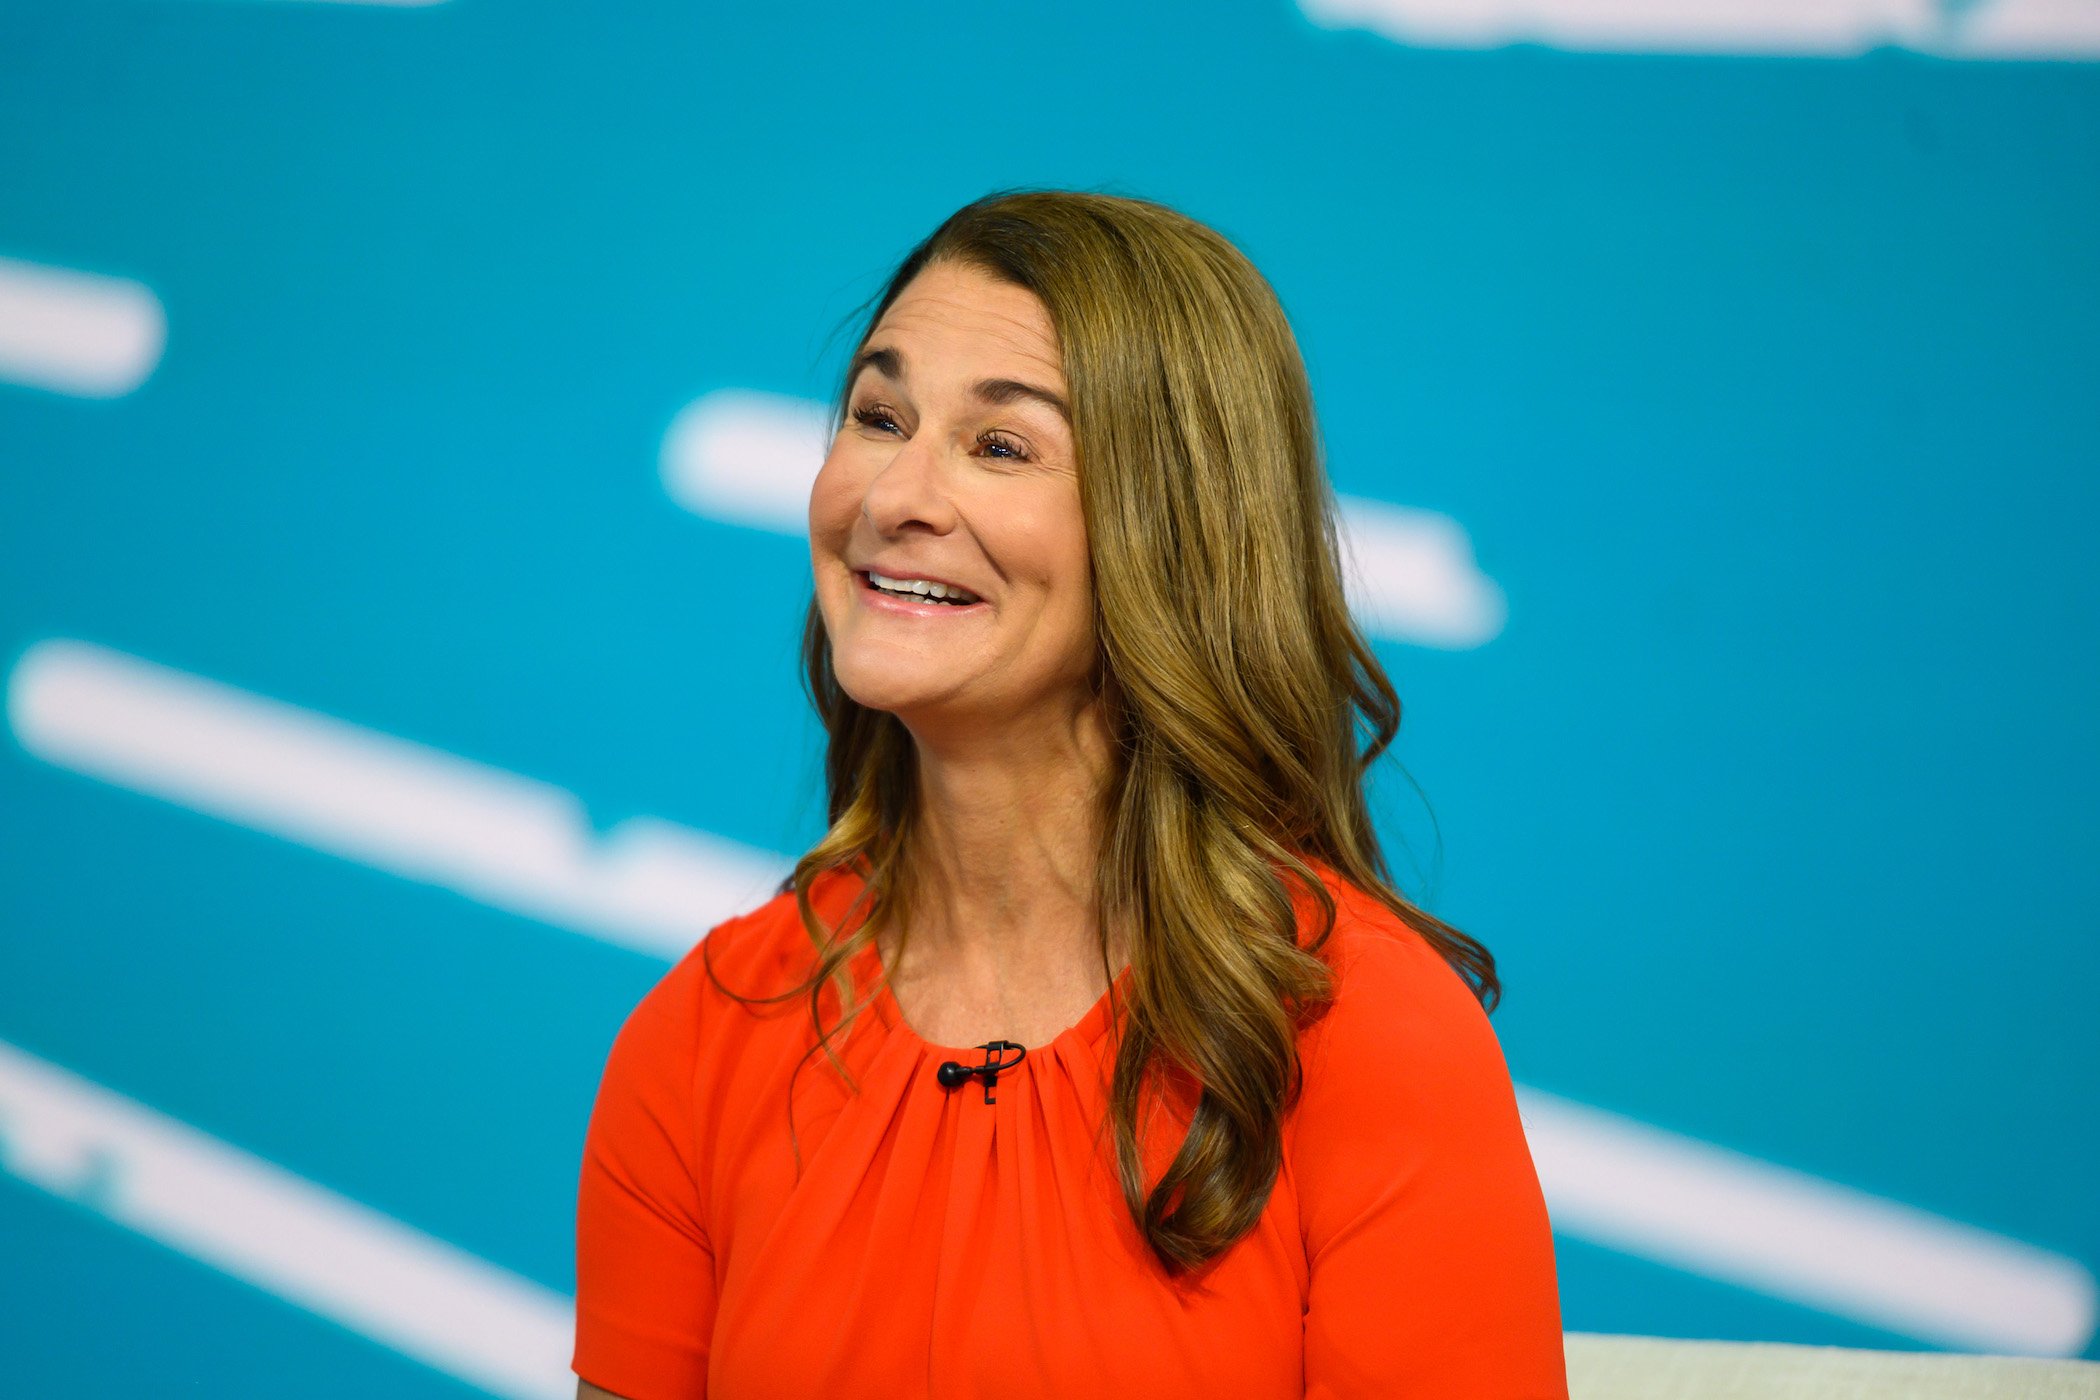 Melinda Gates, Bill Gates' wife, smiling against a blue background